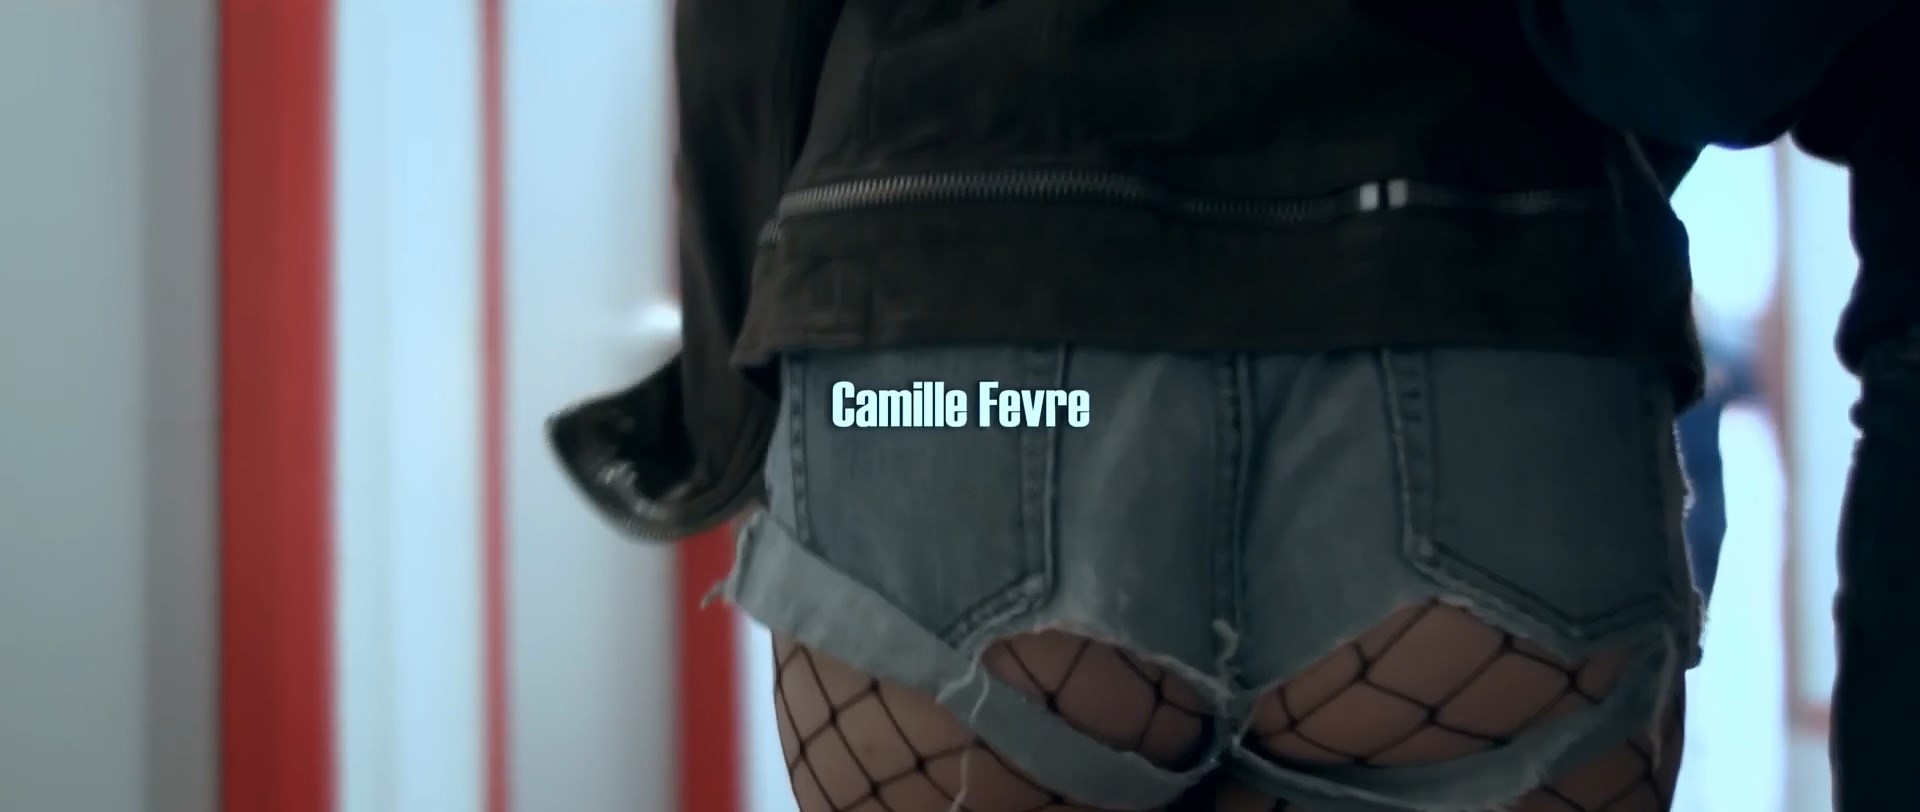 Camille Fevre. sexy. 